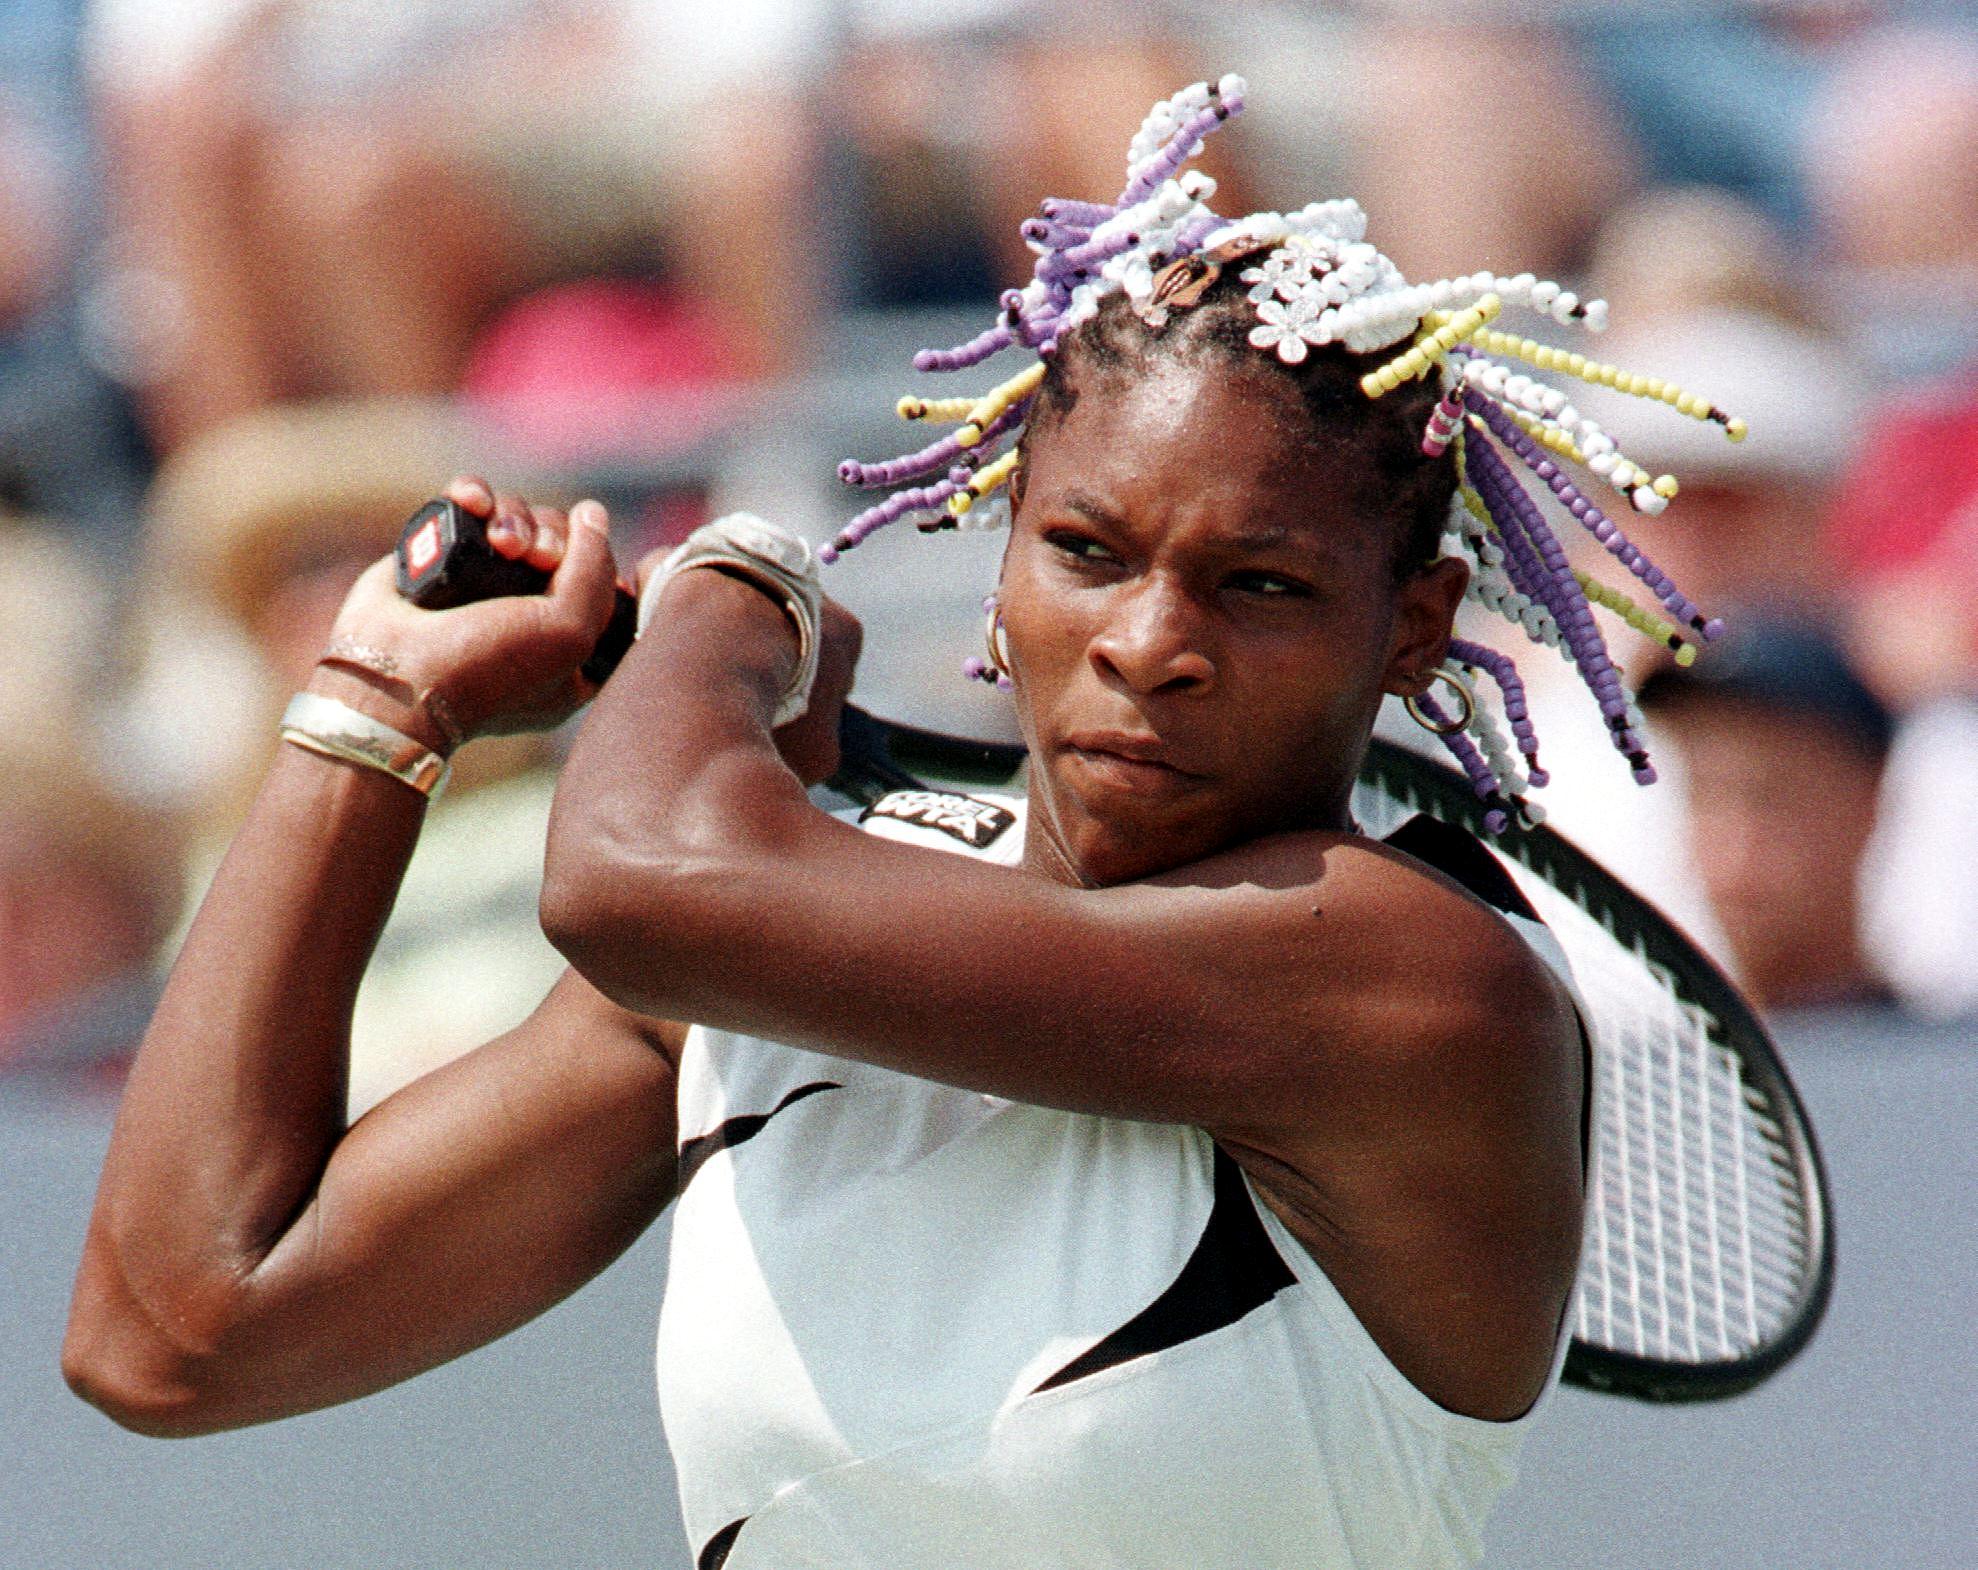 Encommium Wegrijden Minst On this day, 25 years ago, Serena Williams made her pro tennis debut